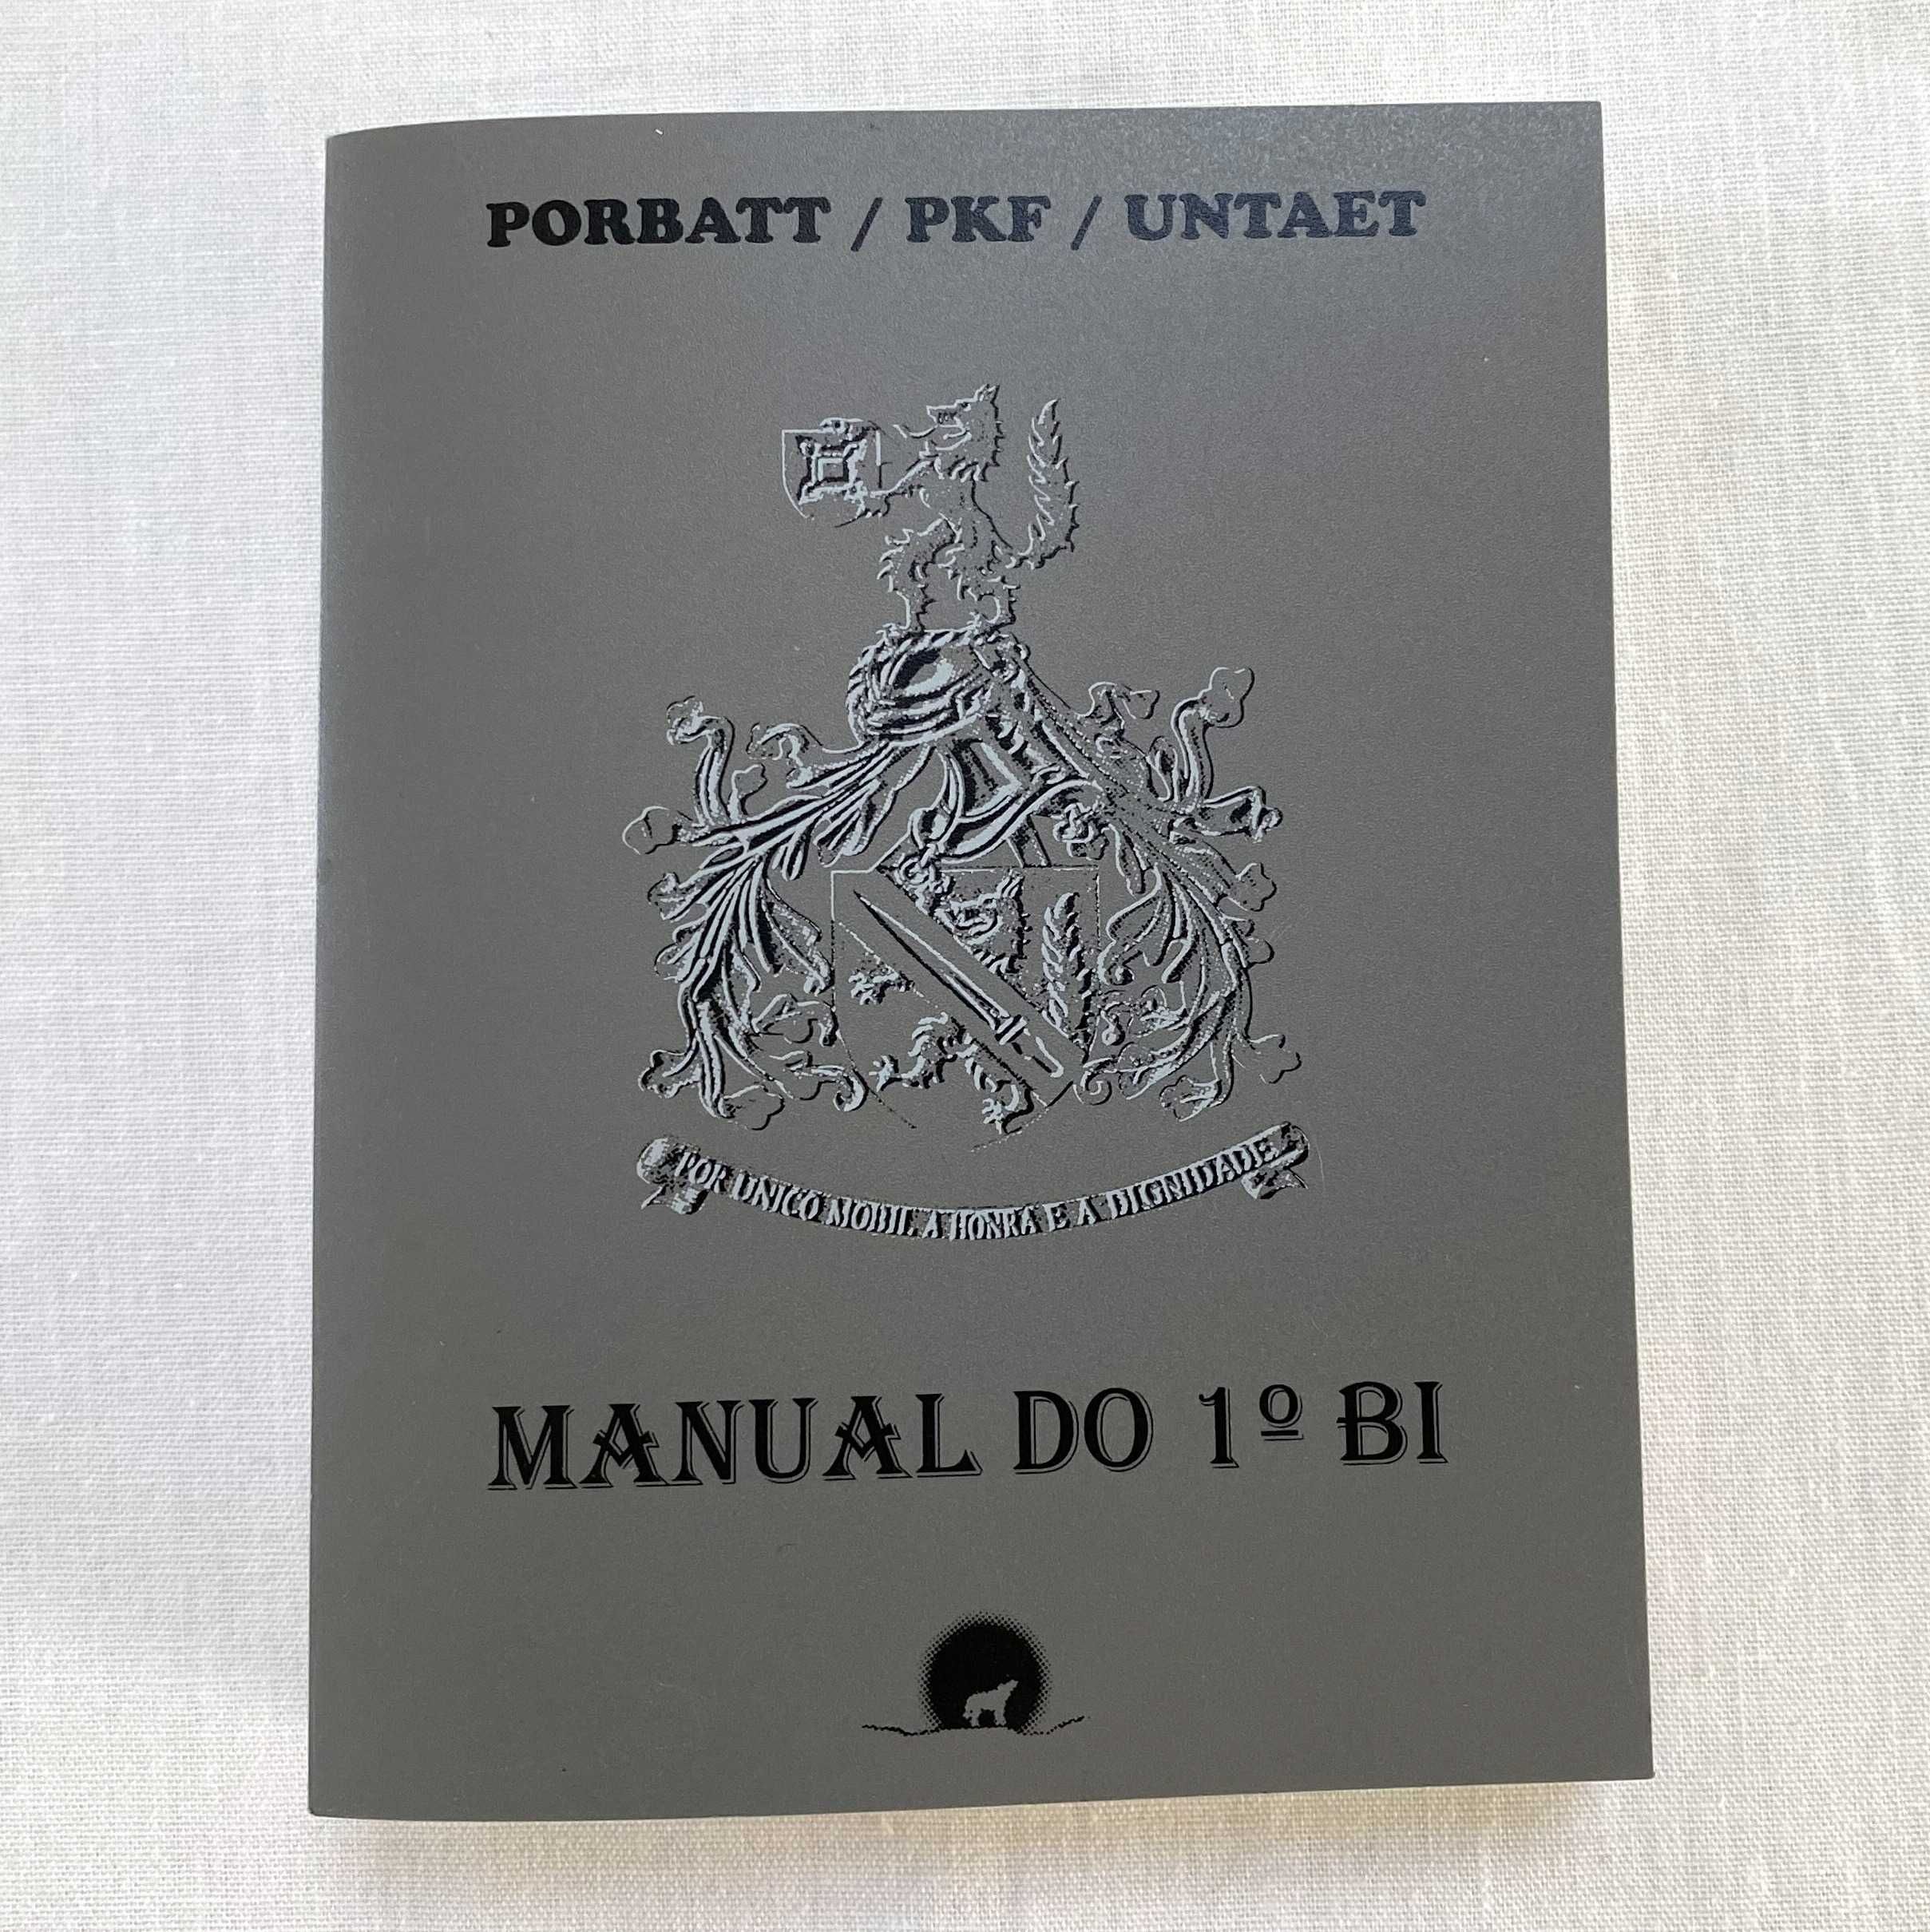 Manual de bolso missão em Timor PORBATT/PKF/UNTAET